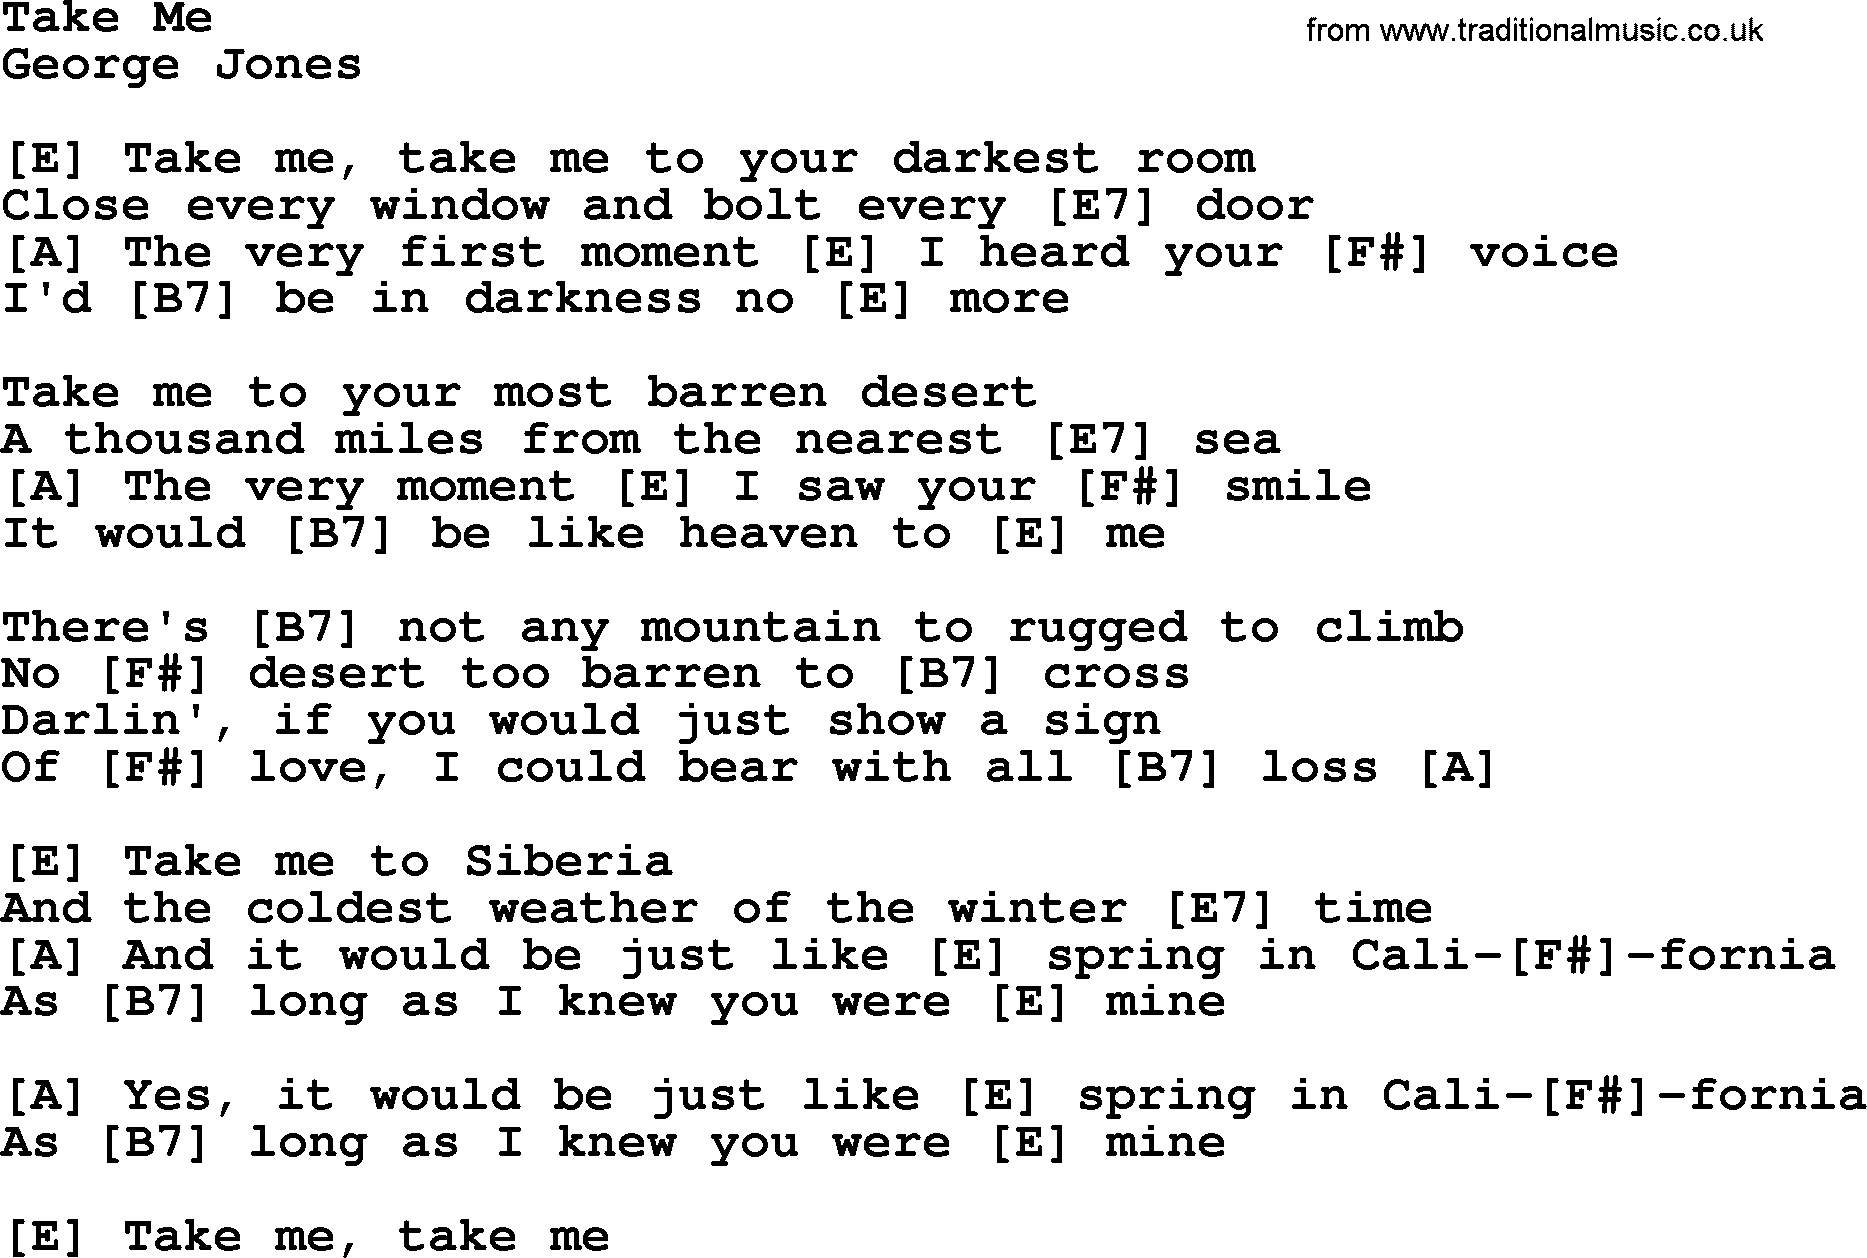 George Jones song: Take Me, lyrics and chords